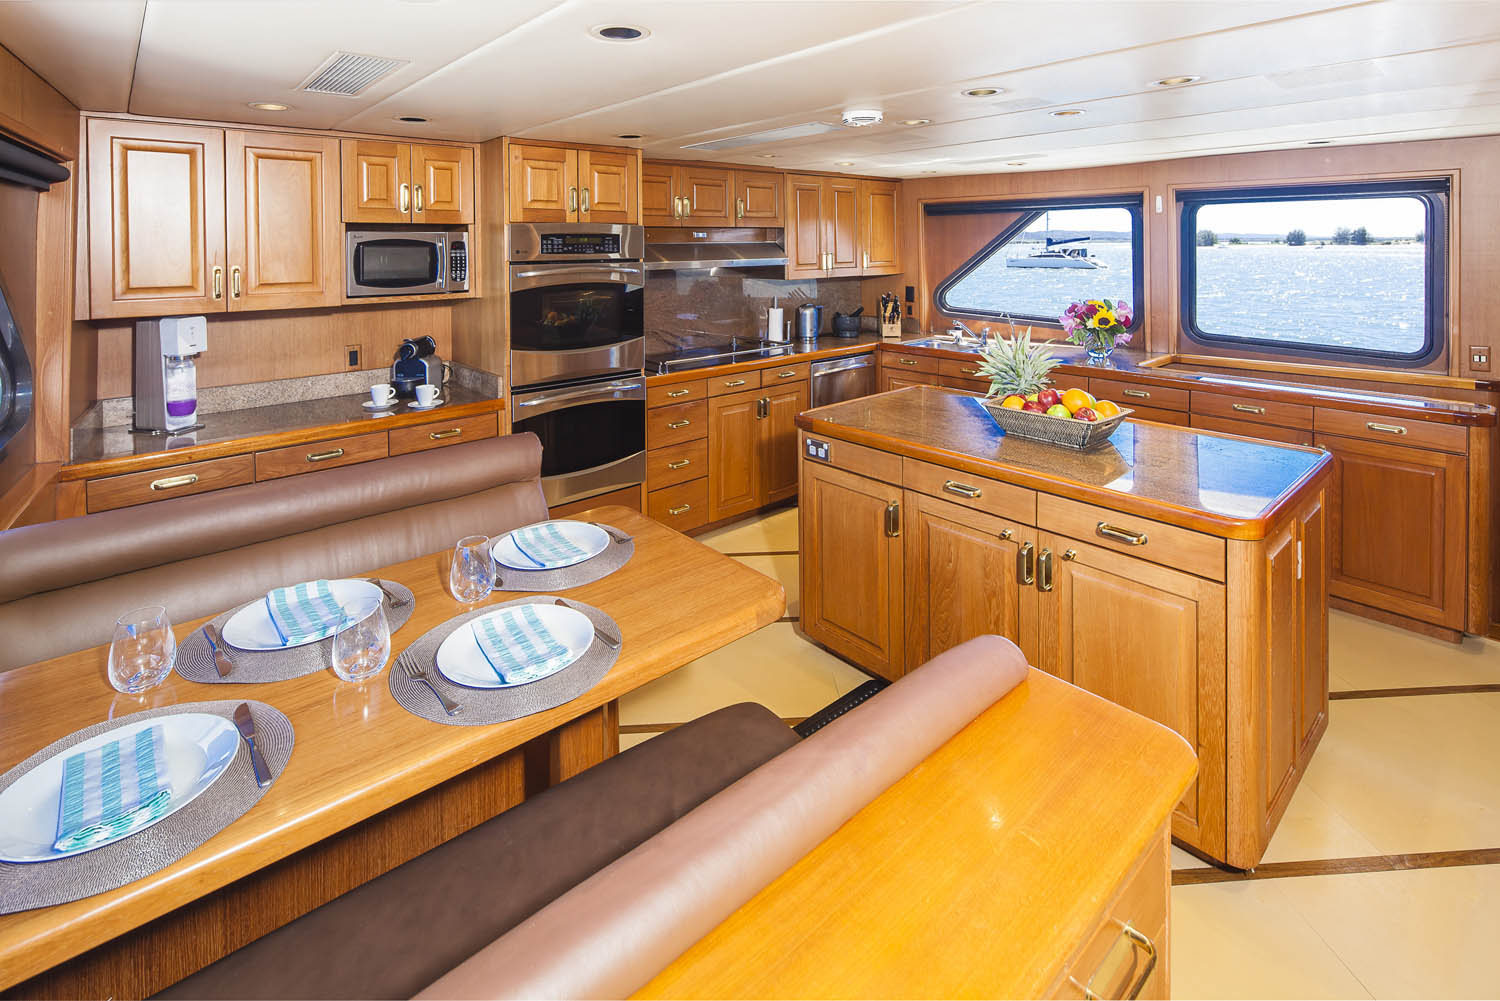 M/Y Silent World yacht for sale II galley kitchen